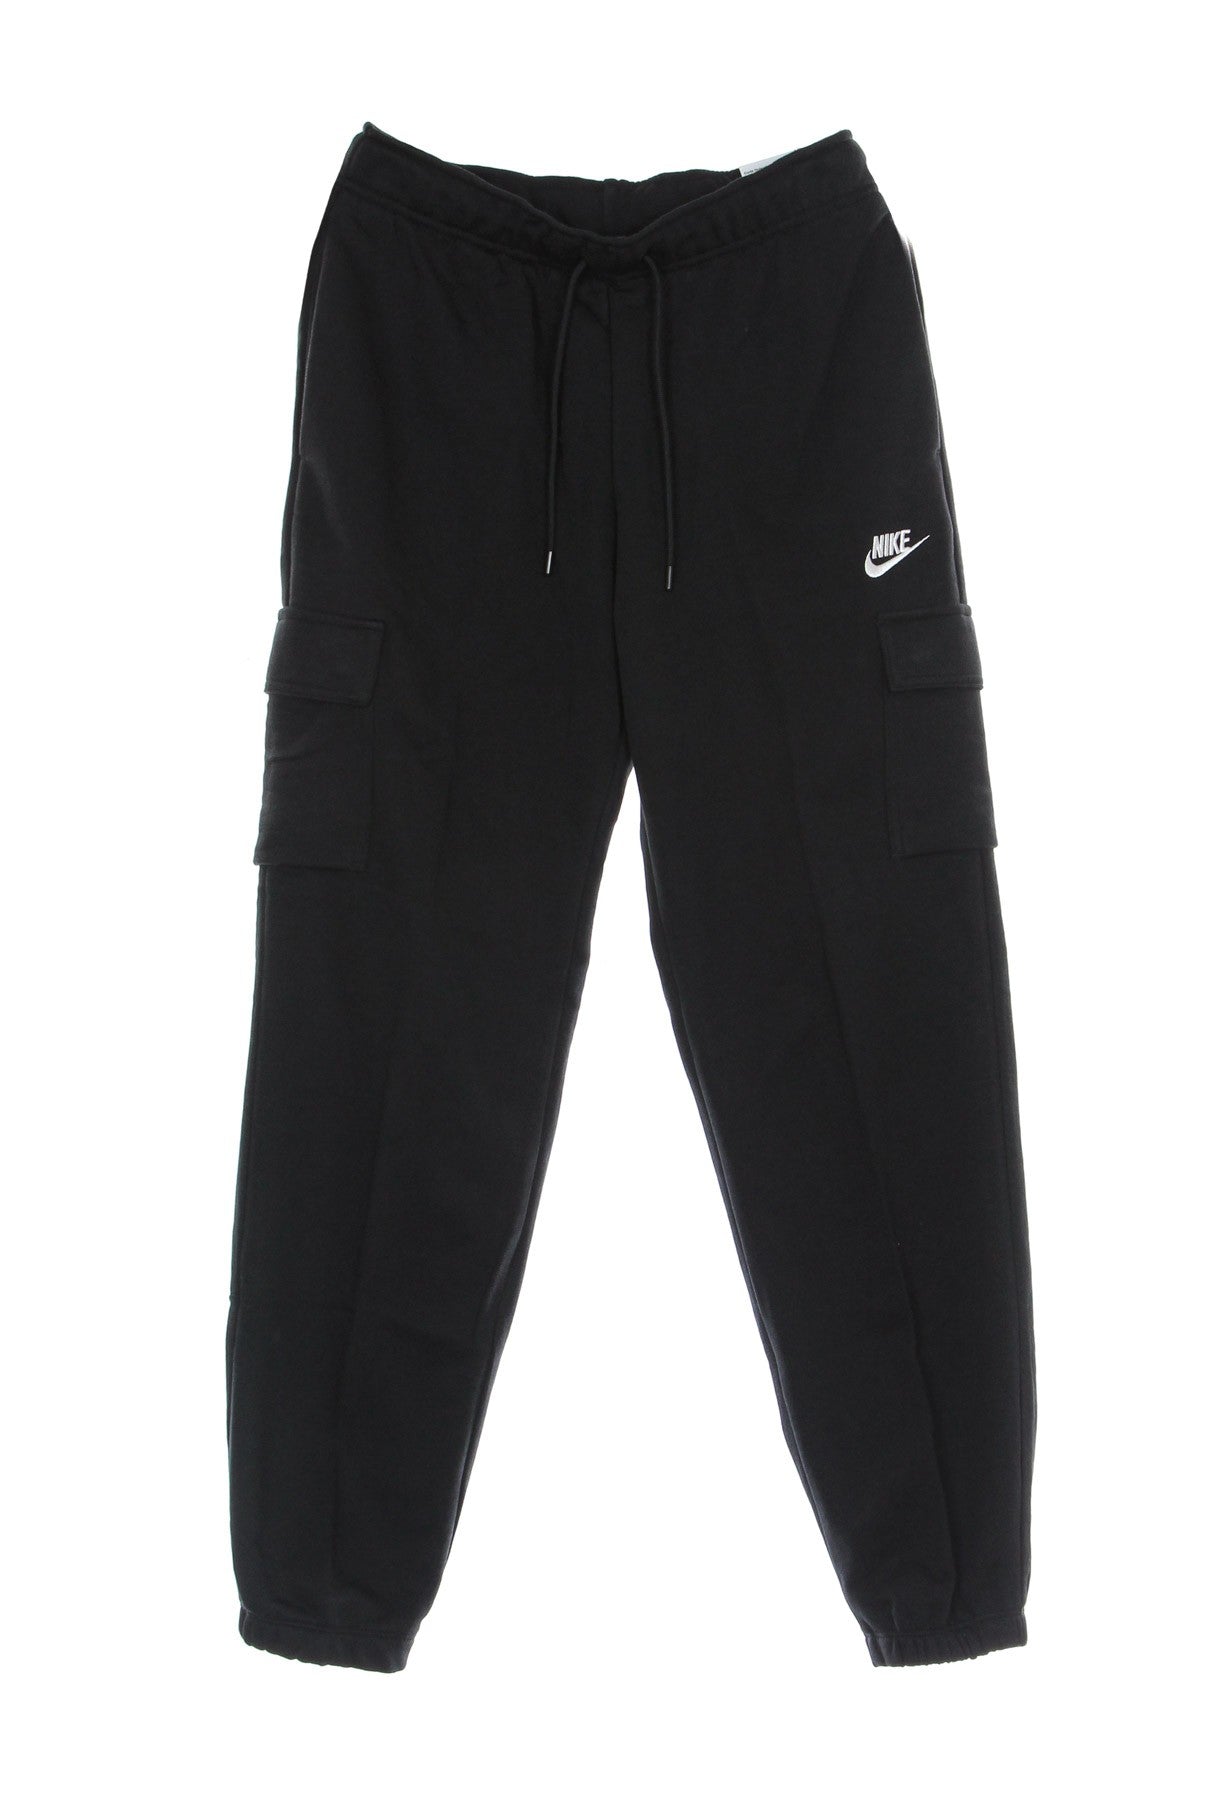 Nike, Pantalone Tuta Felpato Donna W Essential Fleece Mr Cargo Pant, 